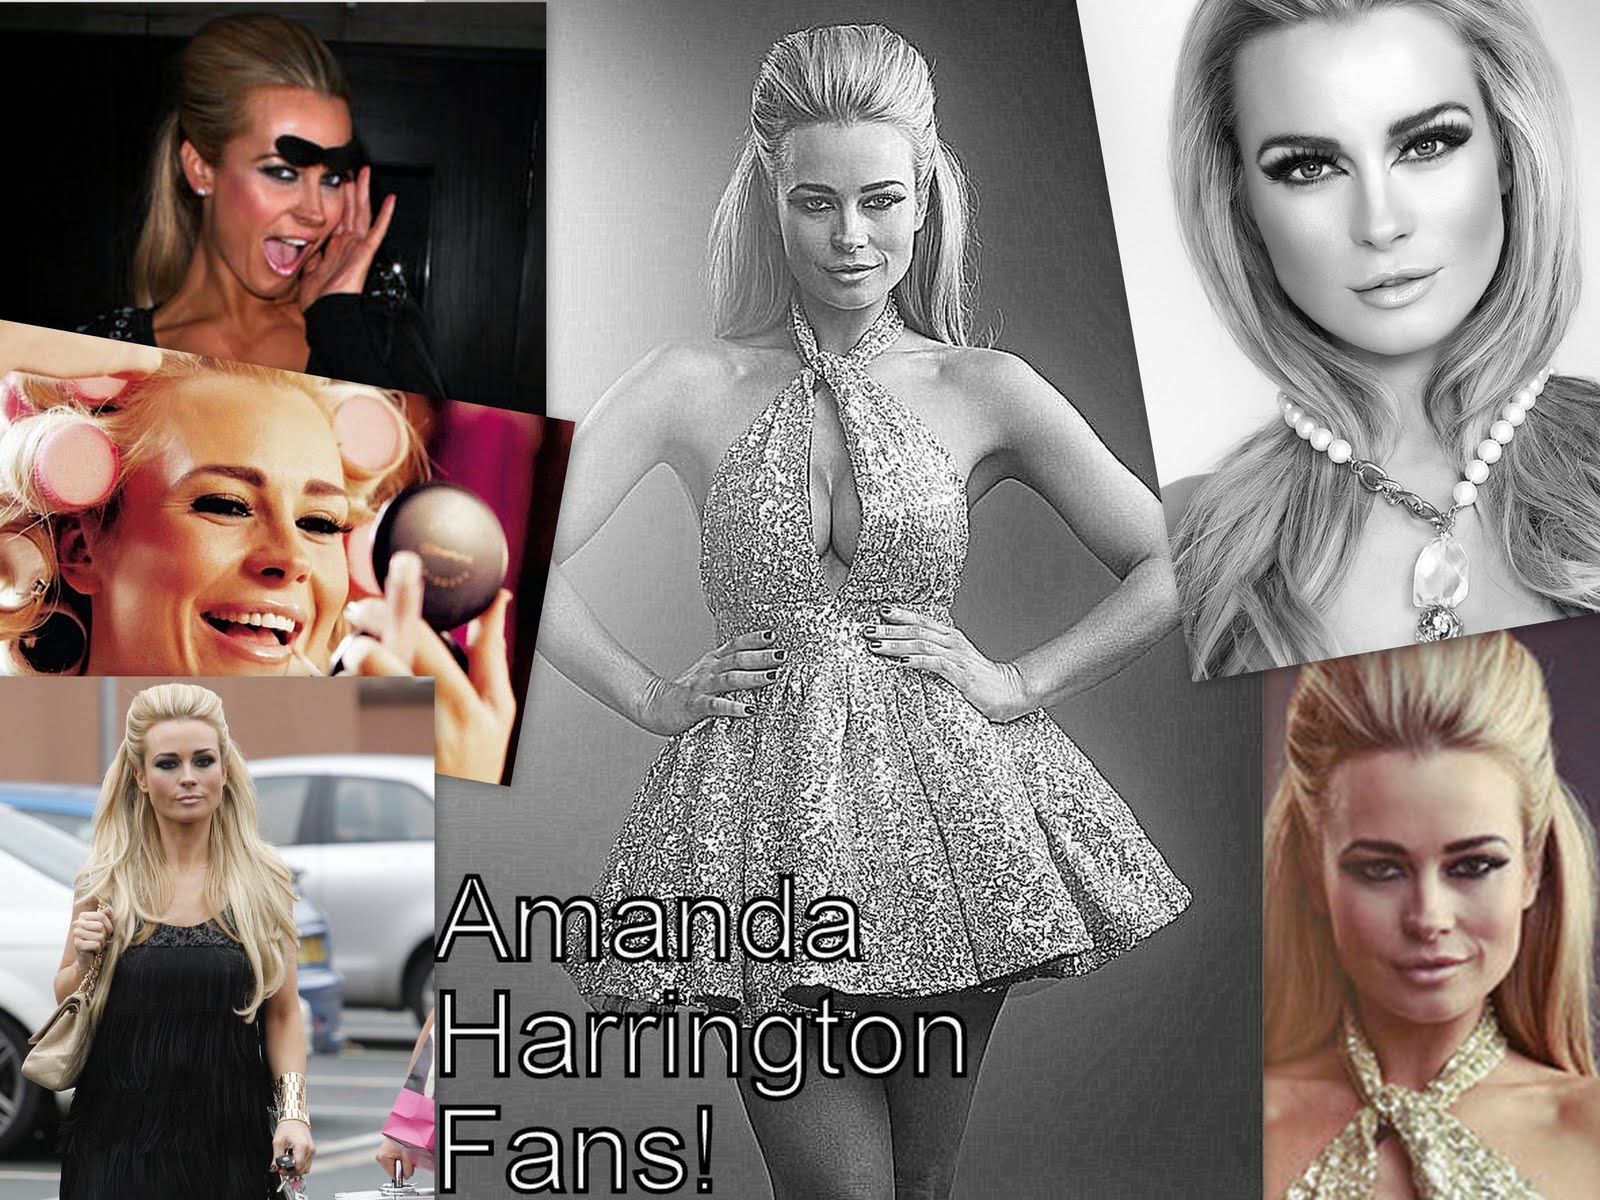 Amanda Harrington 4ever!